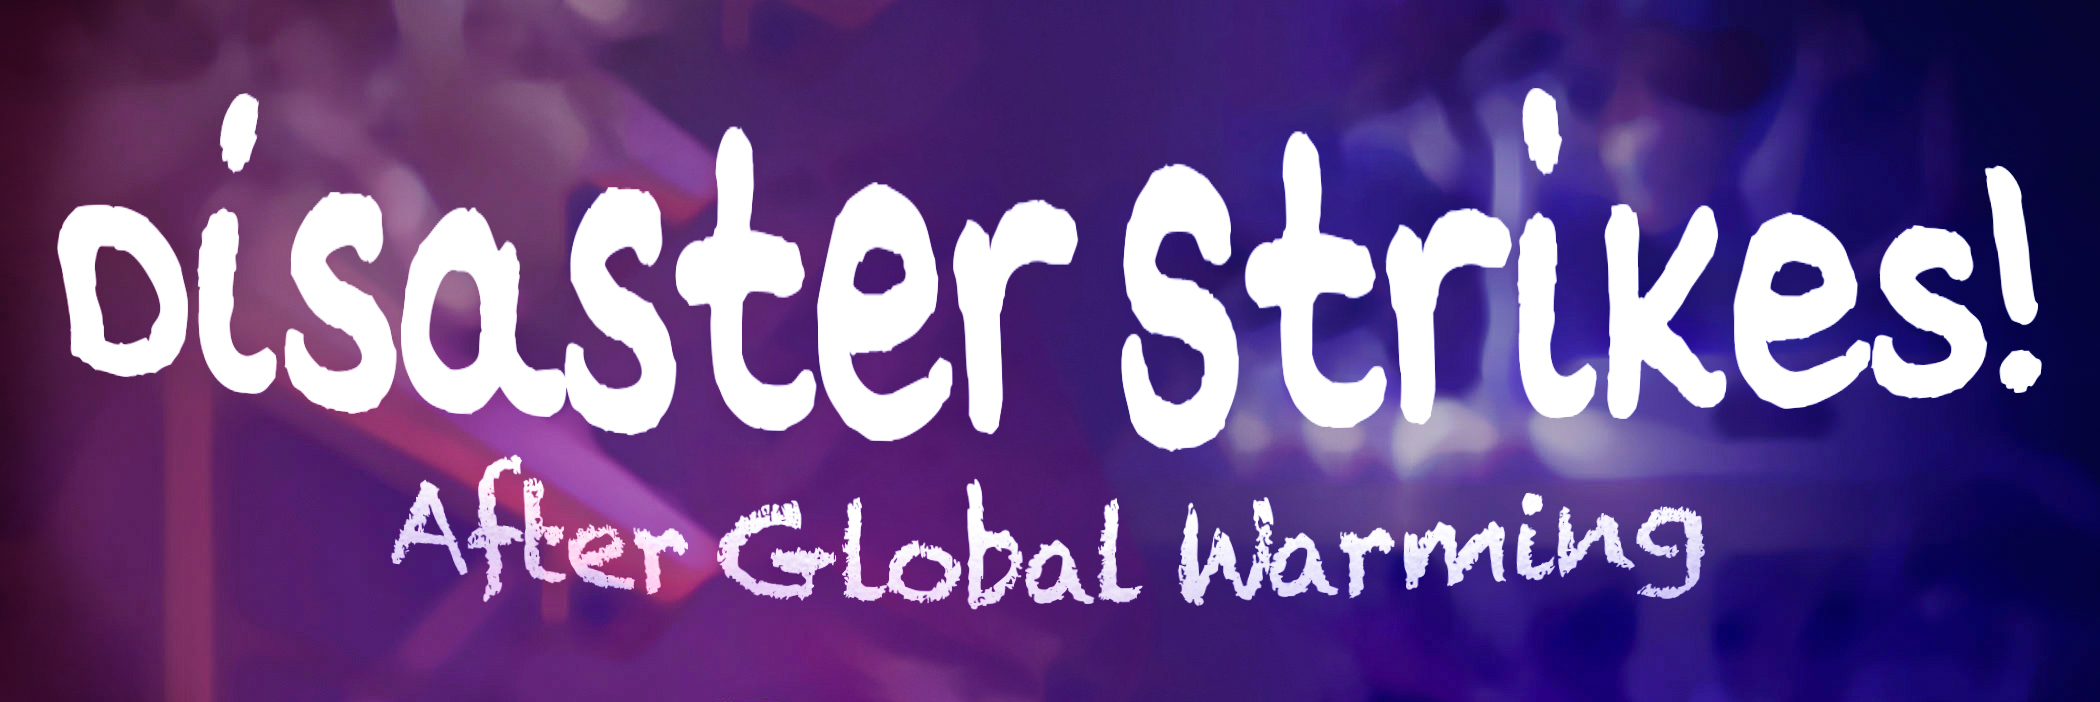 Disaster Strikes - After Global Warming